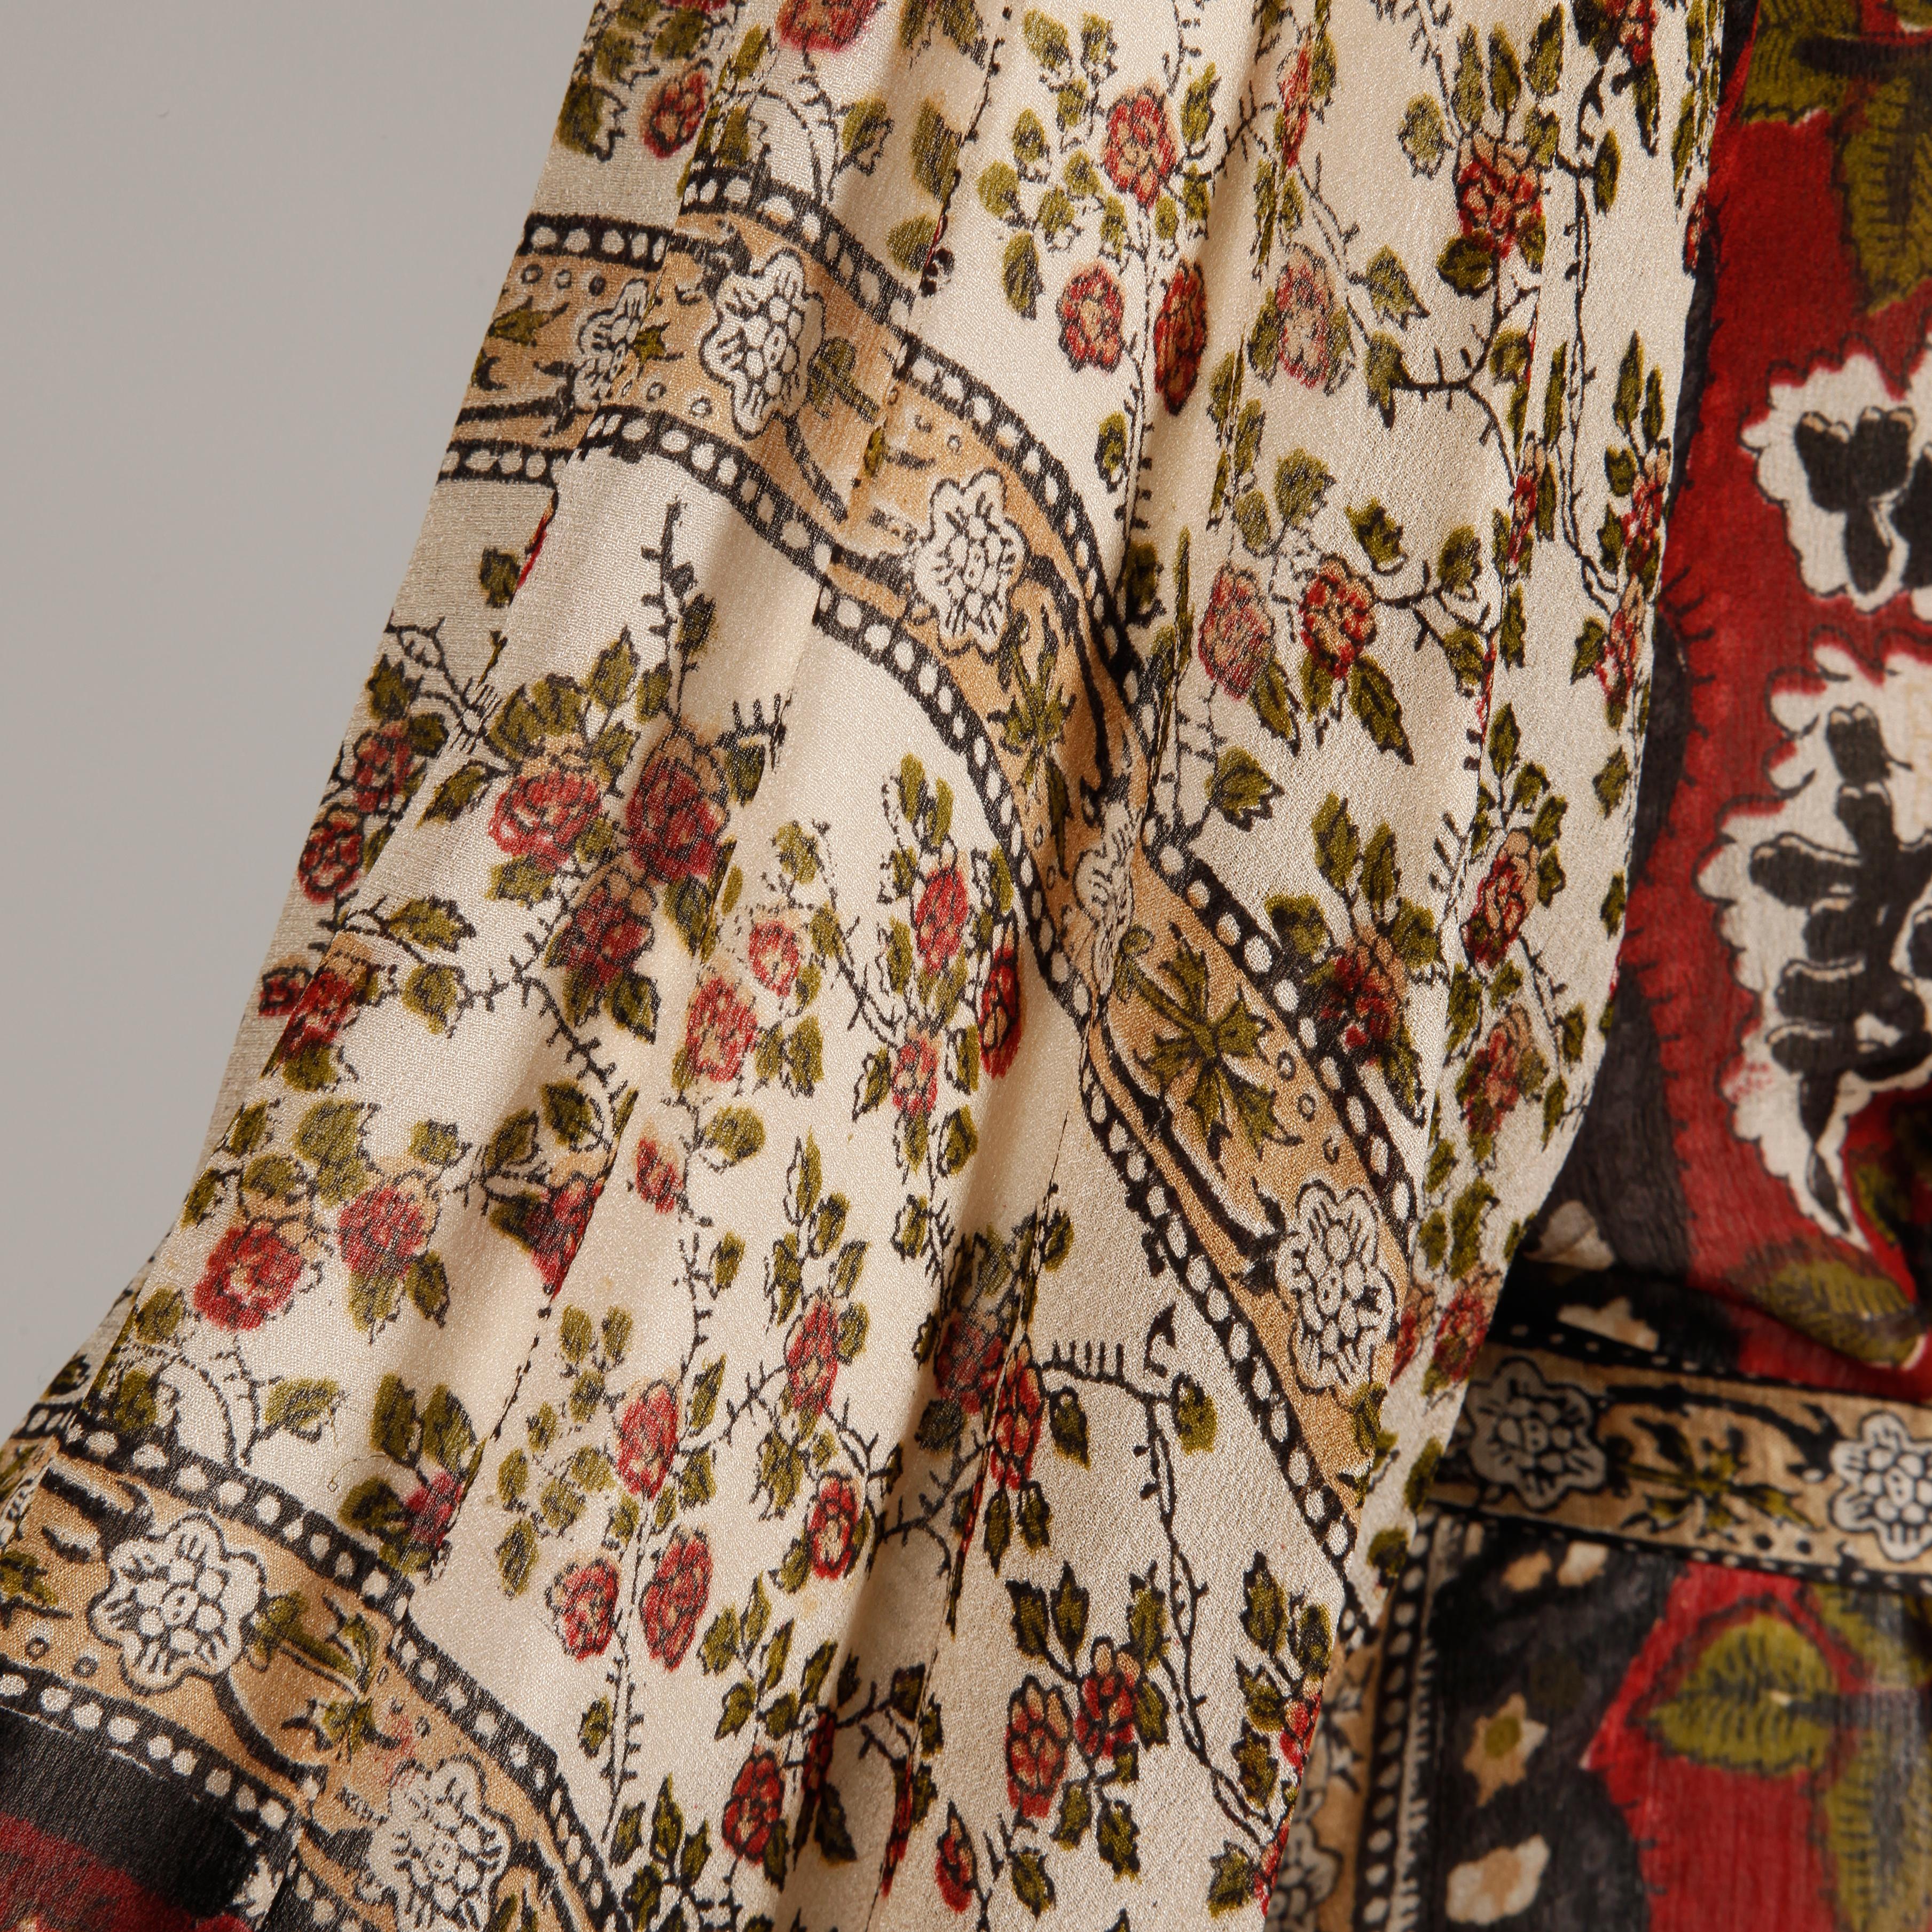 Ritu Kumar for Judith Ann 1970s Vintage 100% Silk Indian Hand-Block Print Dress 4